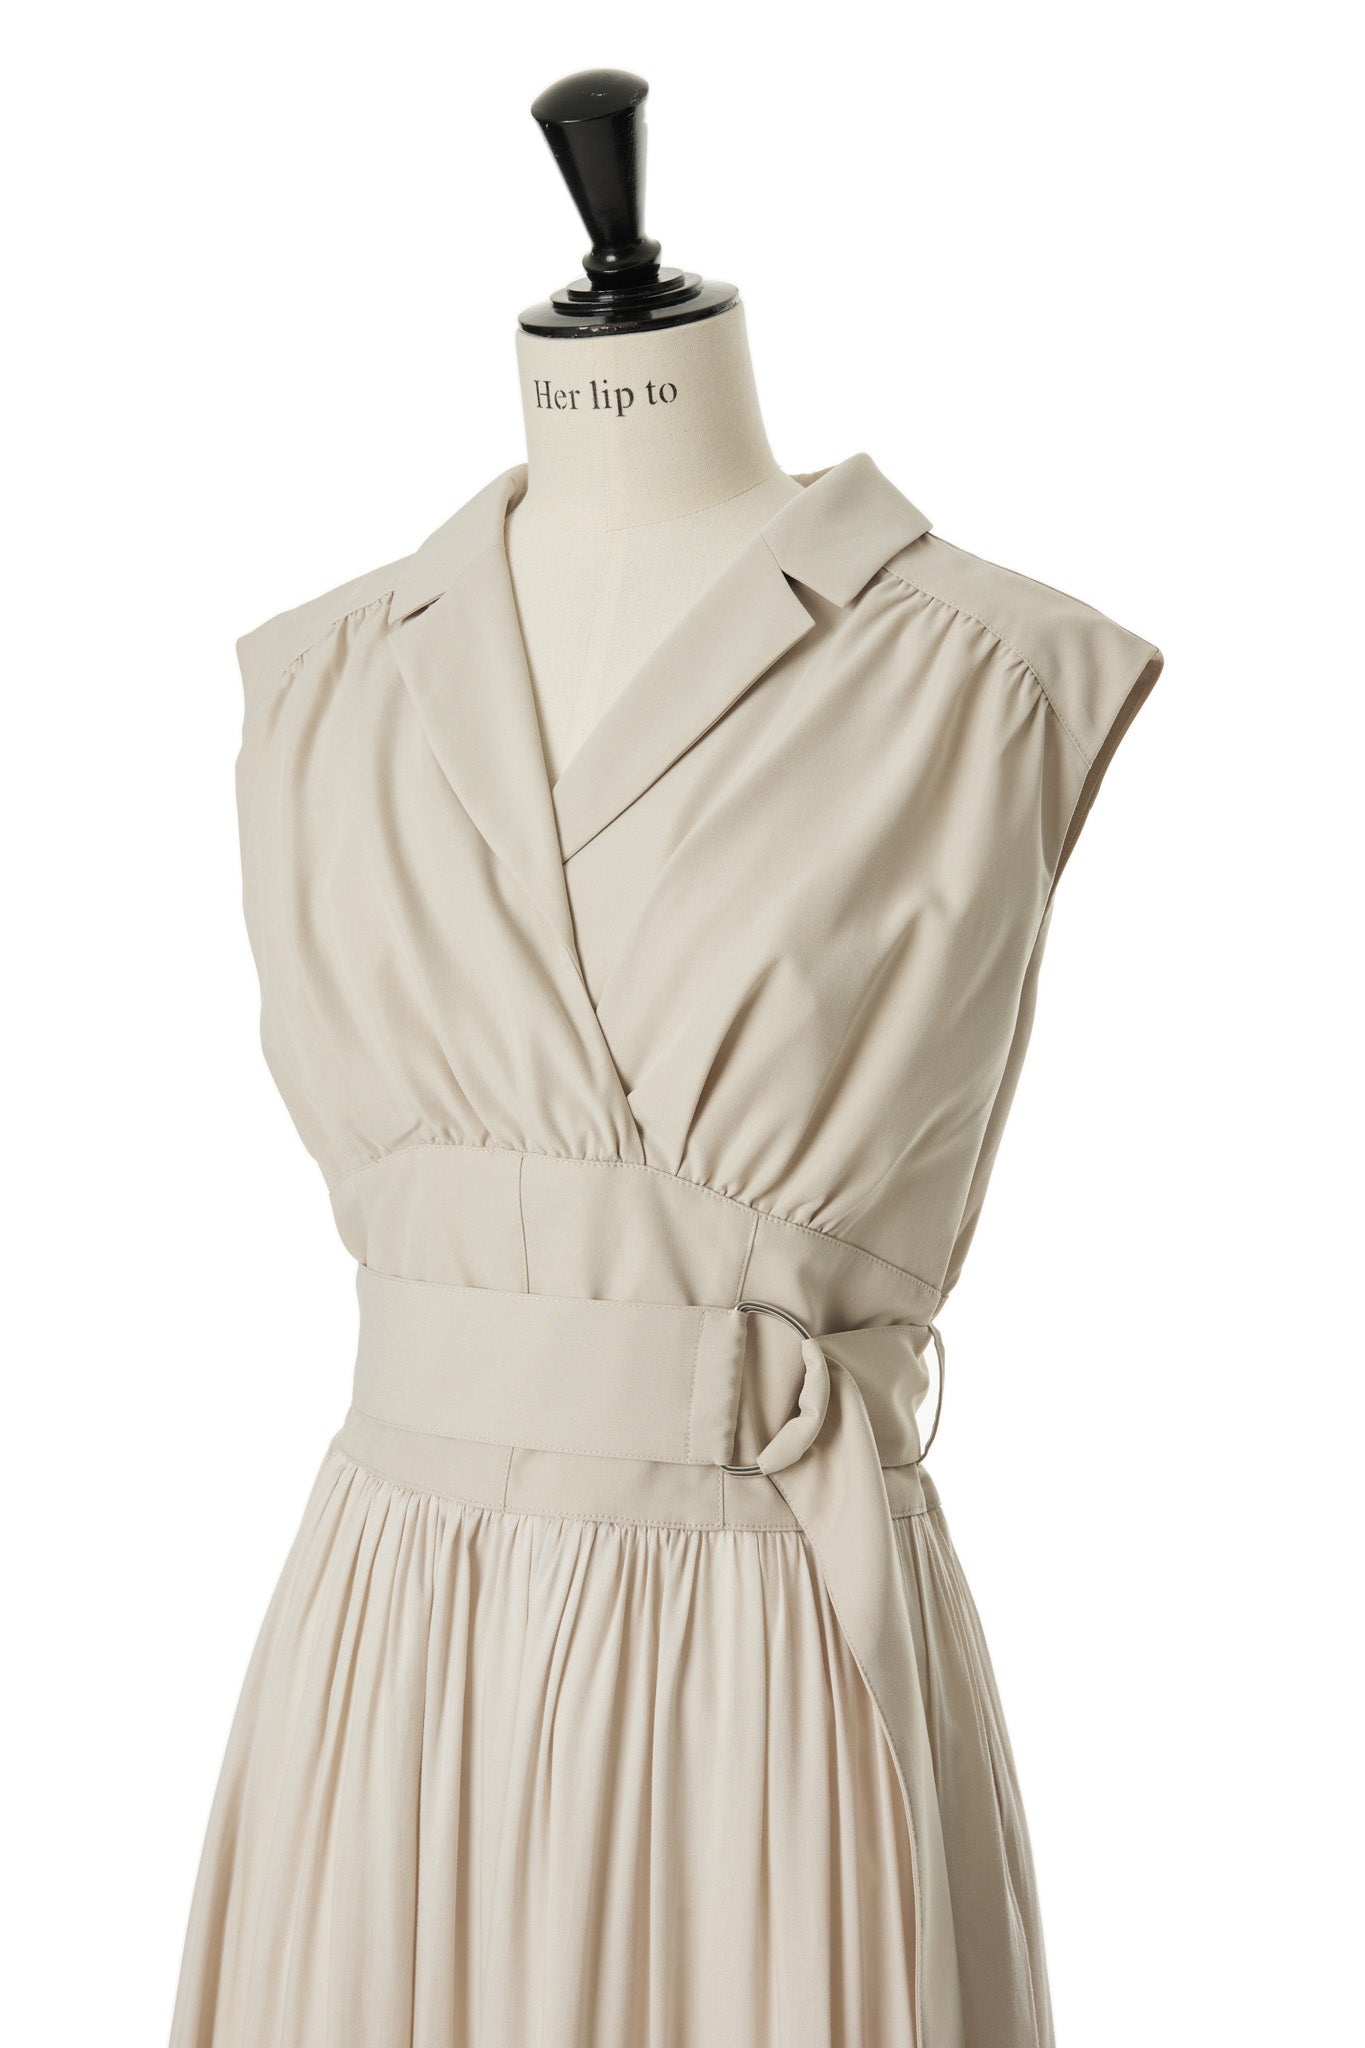 【新品】herlipto Classic Oxford Belted Dress